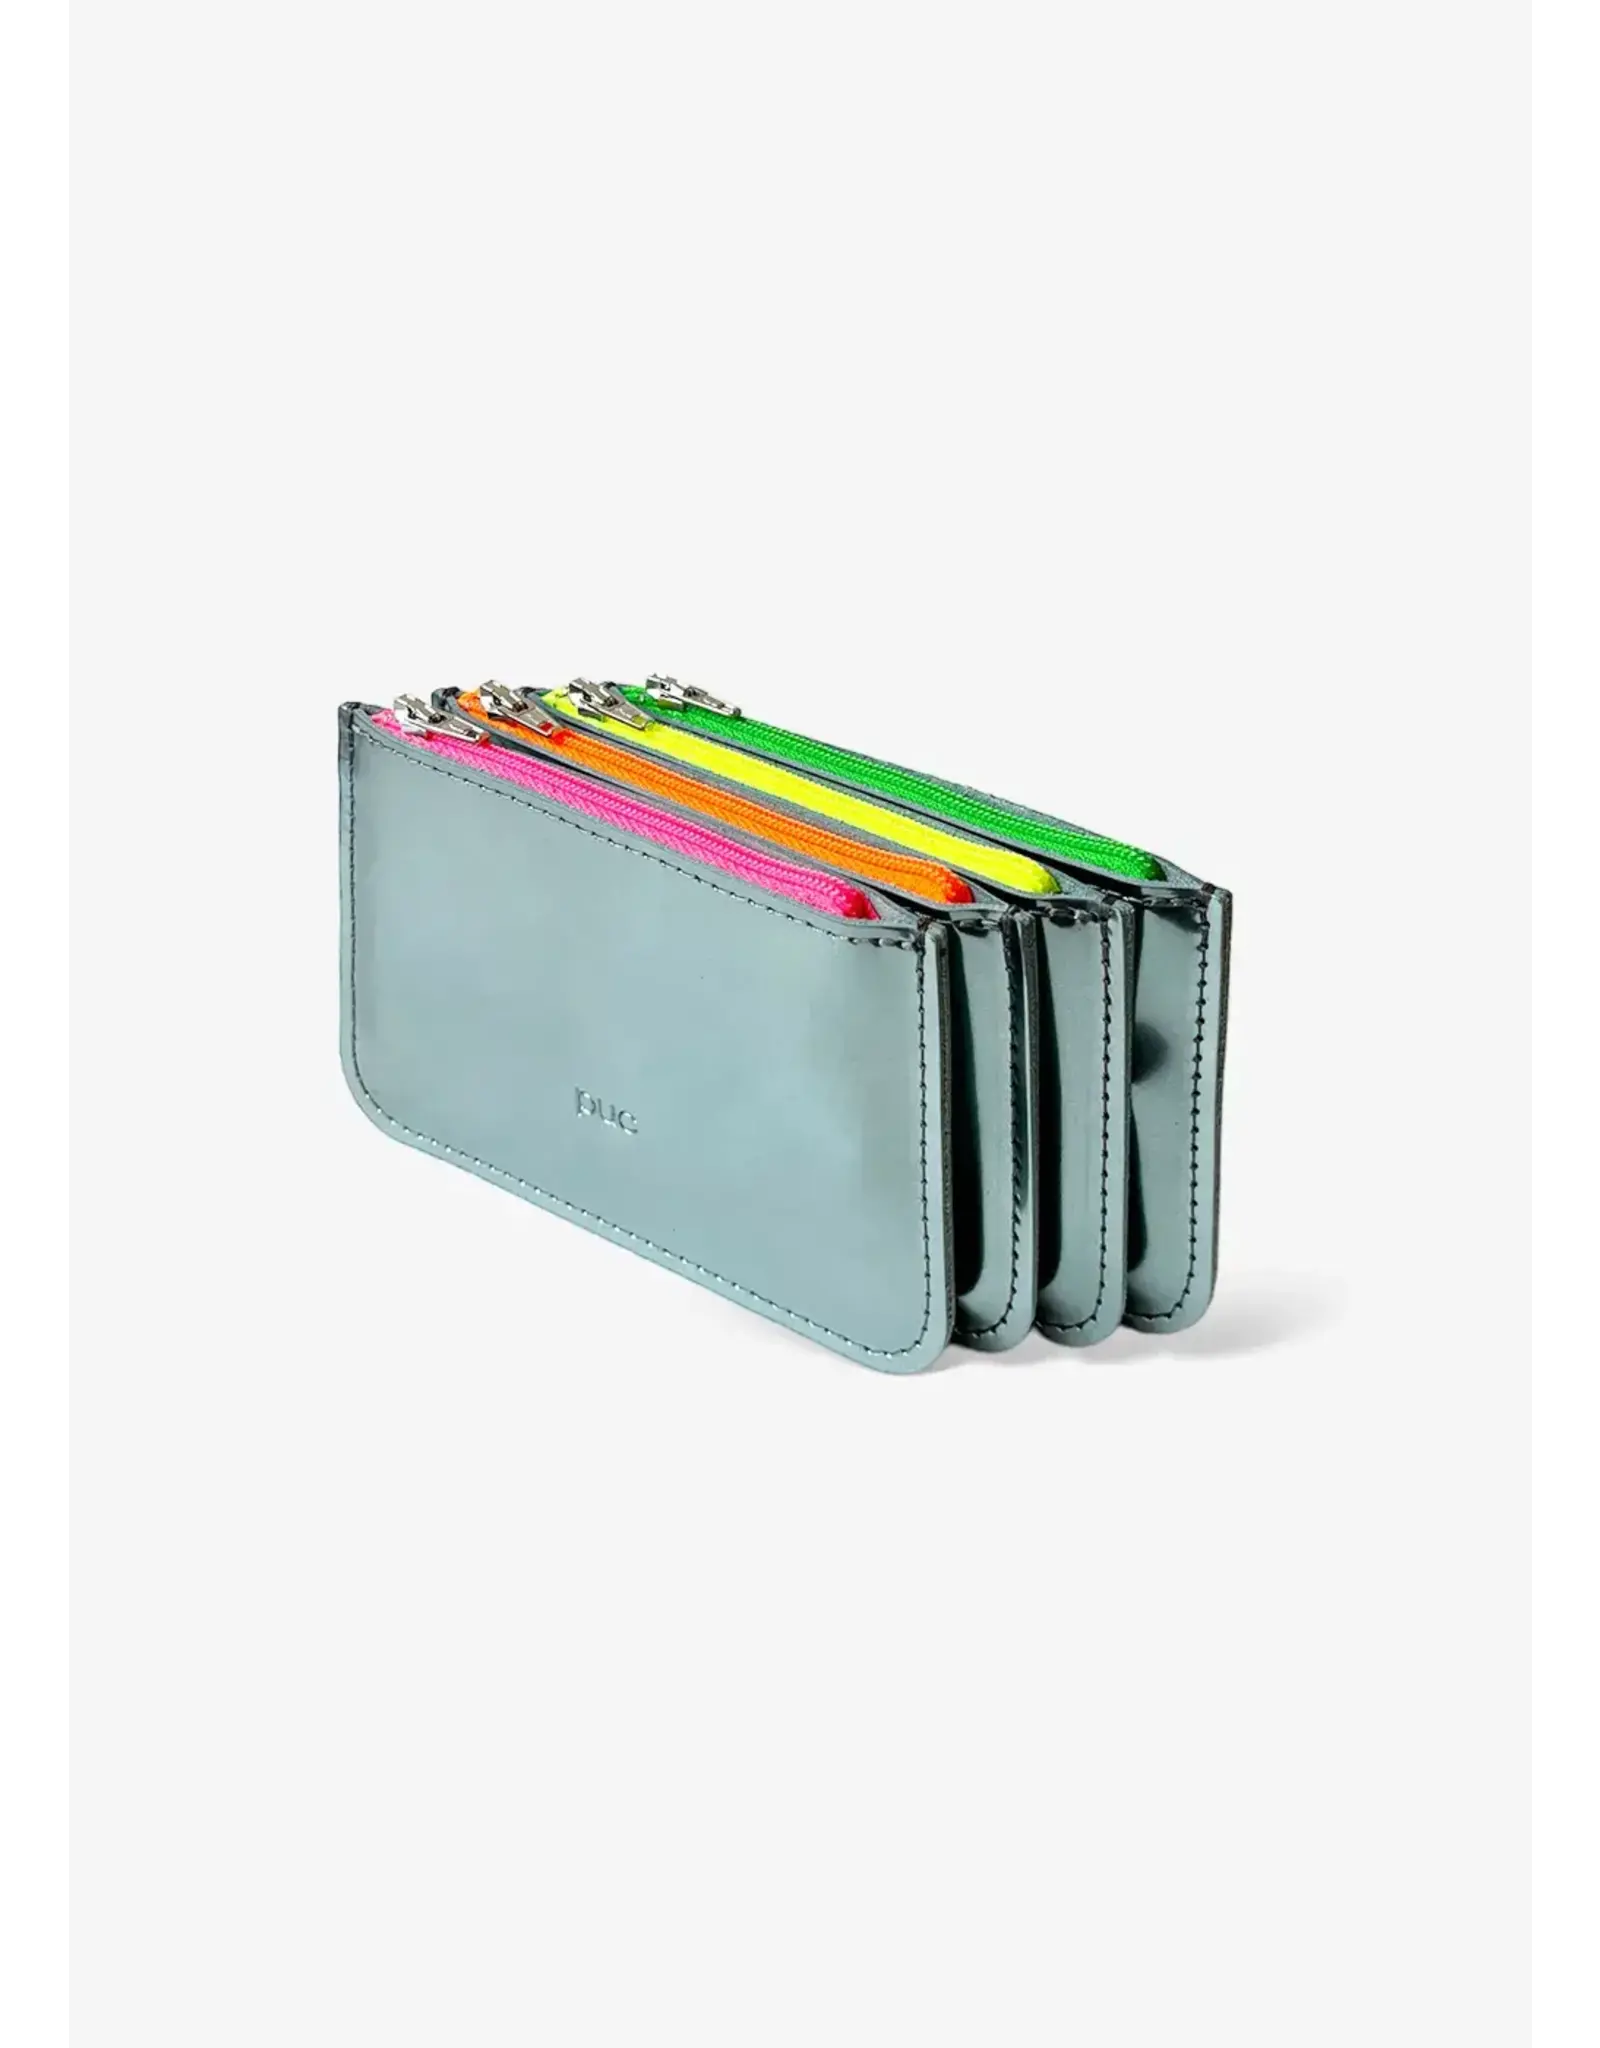 Puc Easy Wallet, Metallic silver - Neon pink